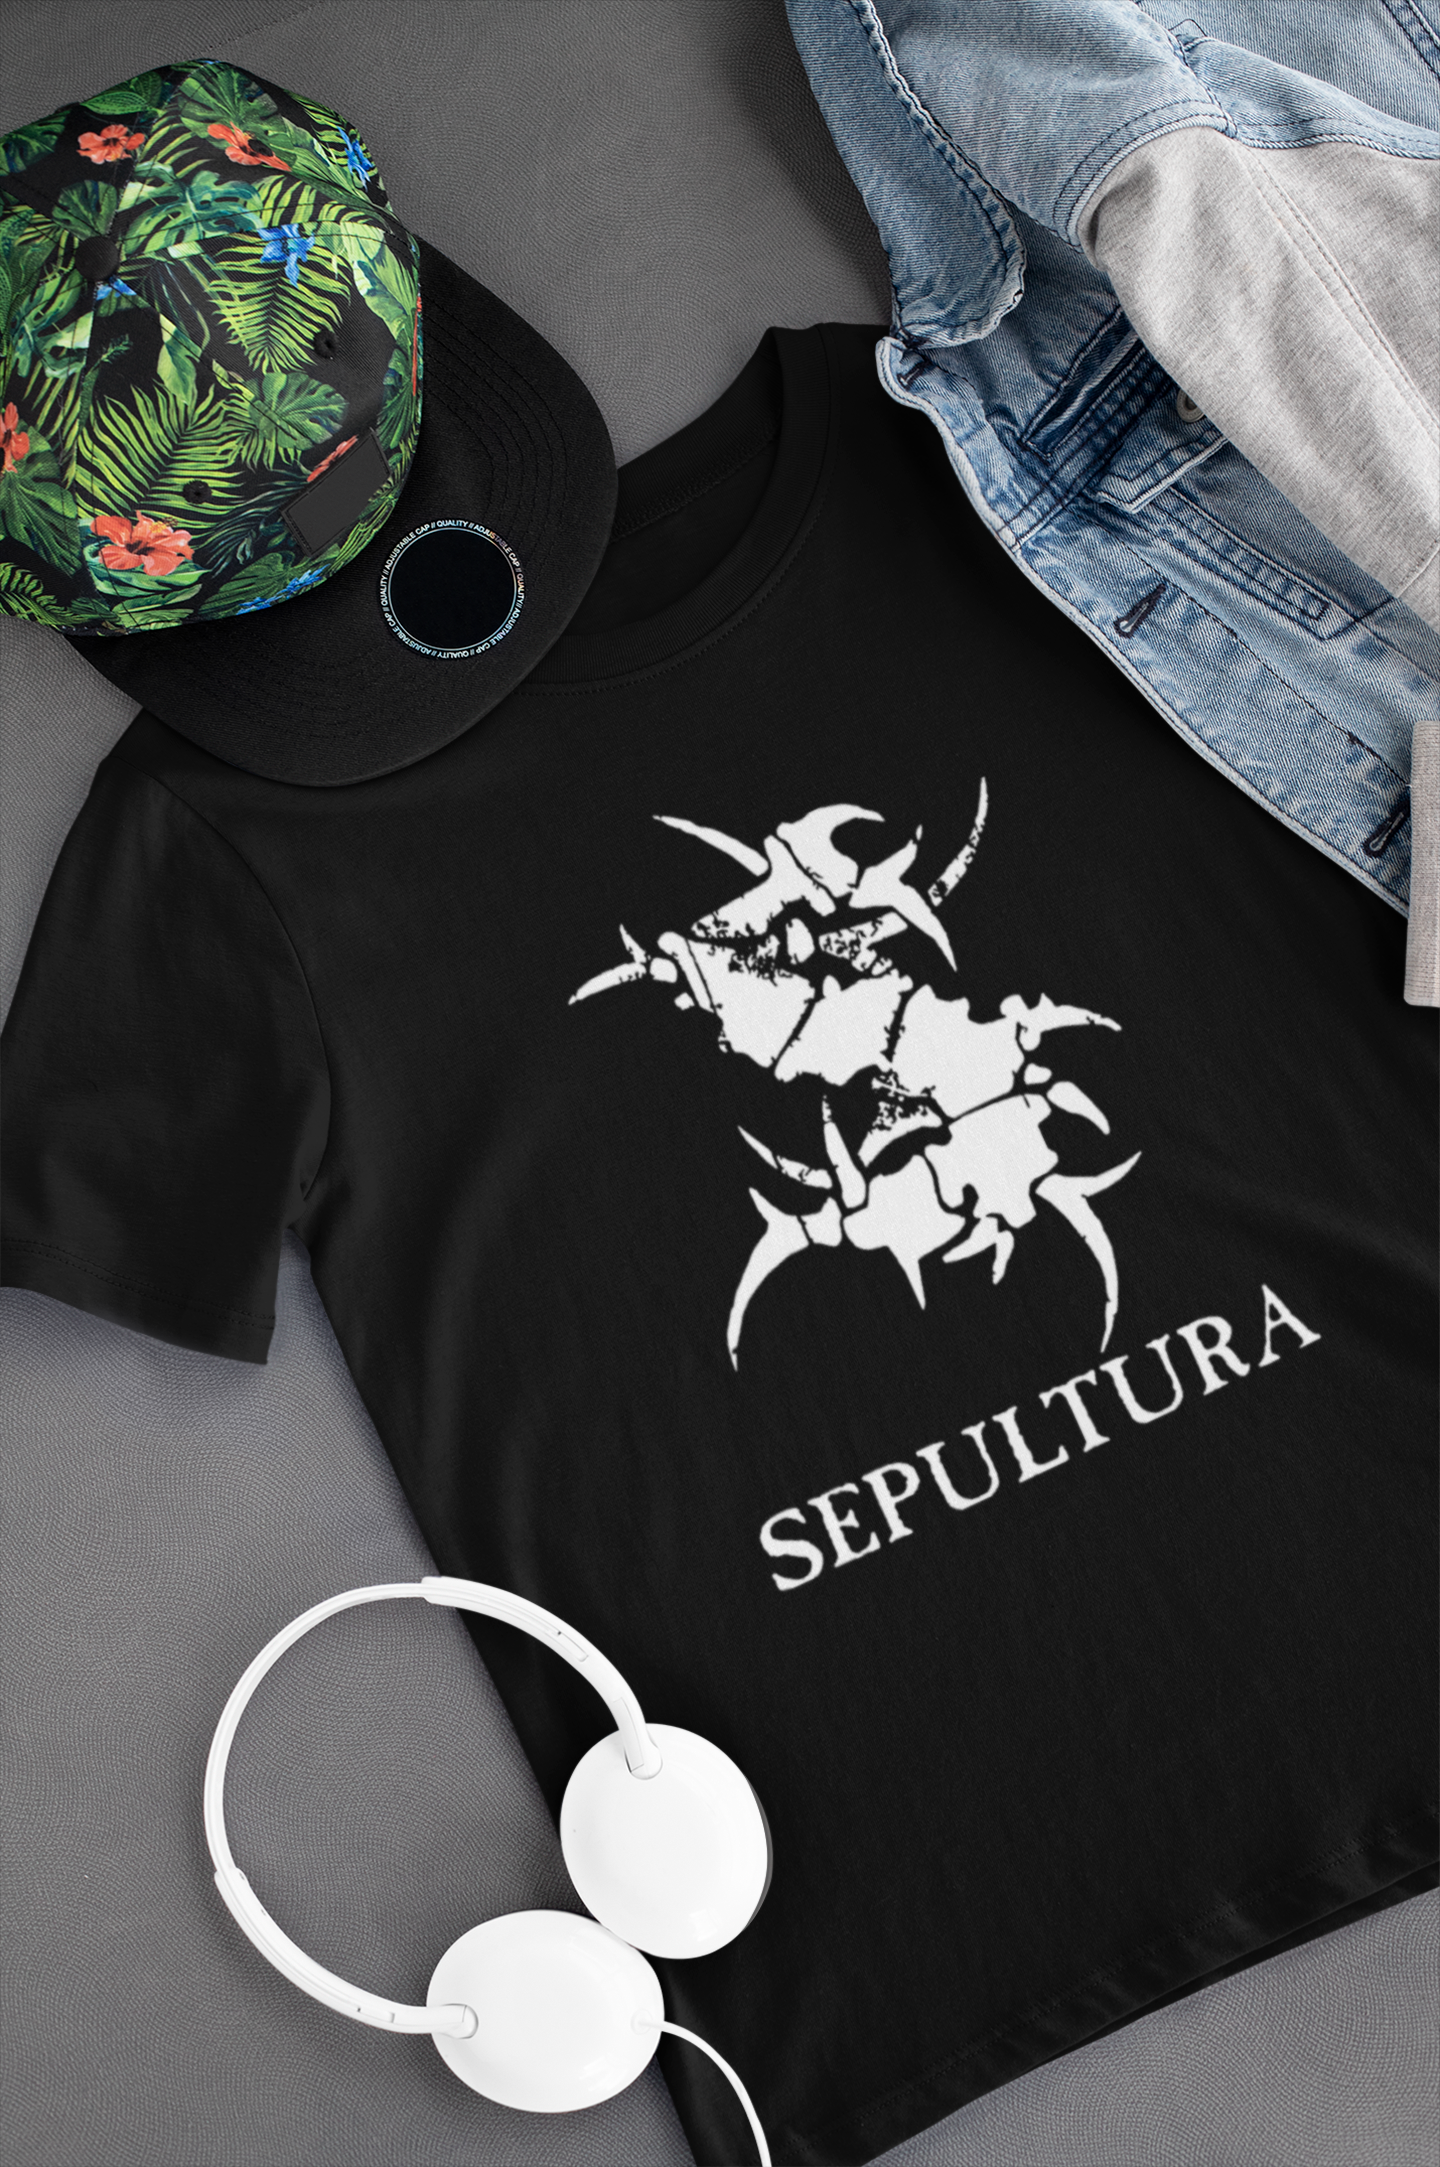 Camiseta "Sepultura" Clássica - Música